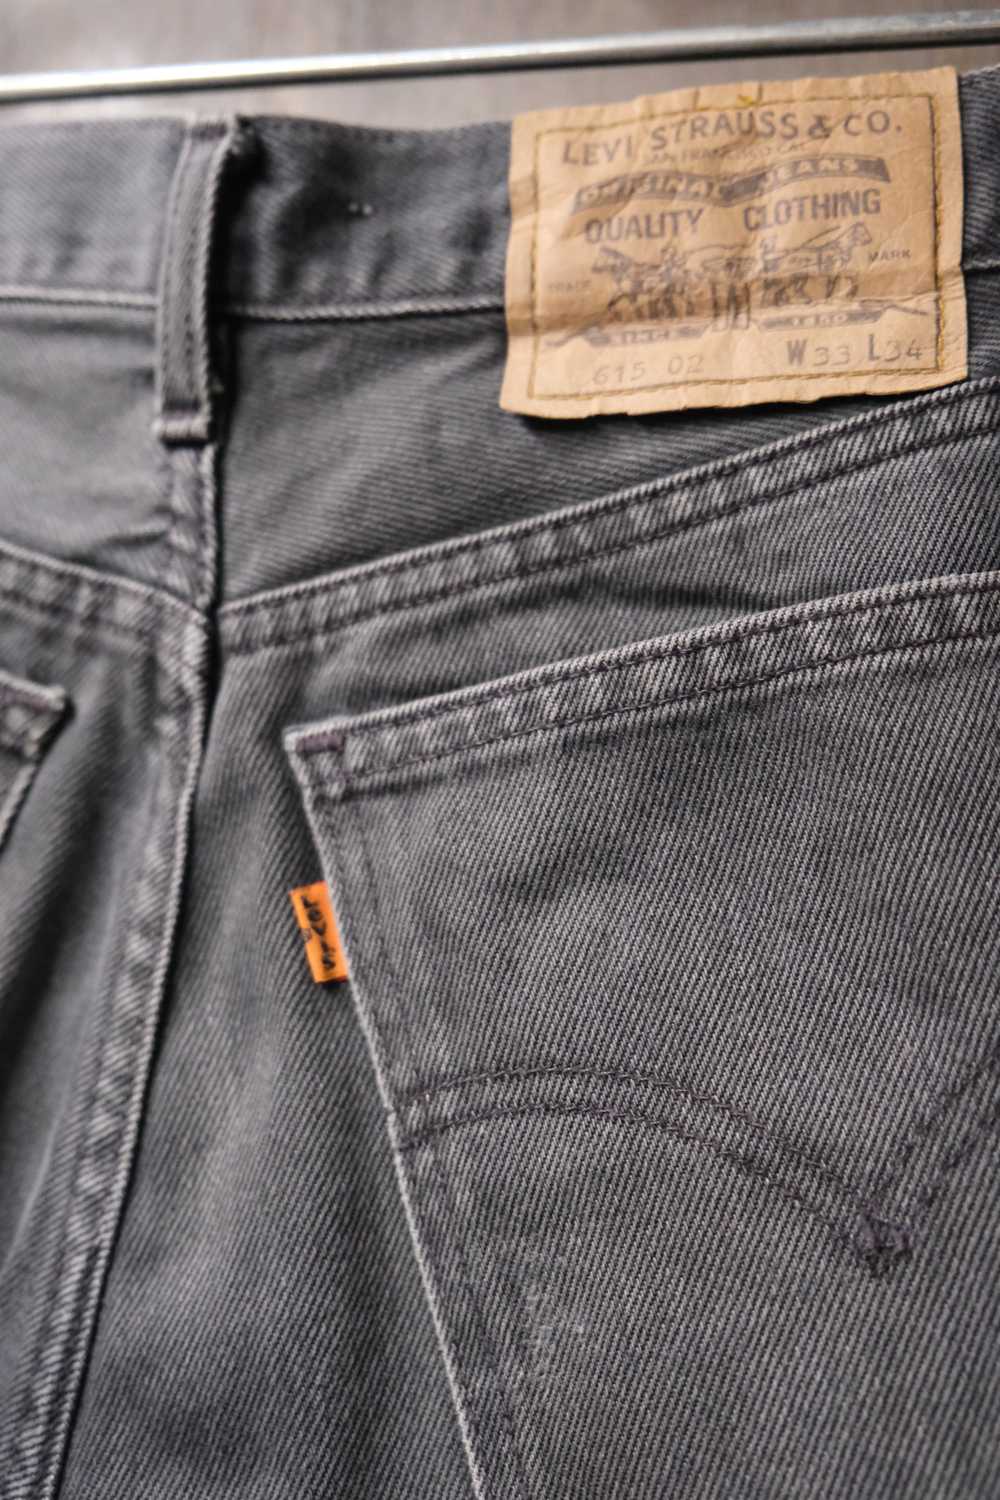 Vintage Levi's 615 orange tab grey jeans w33 - image 2